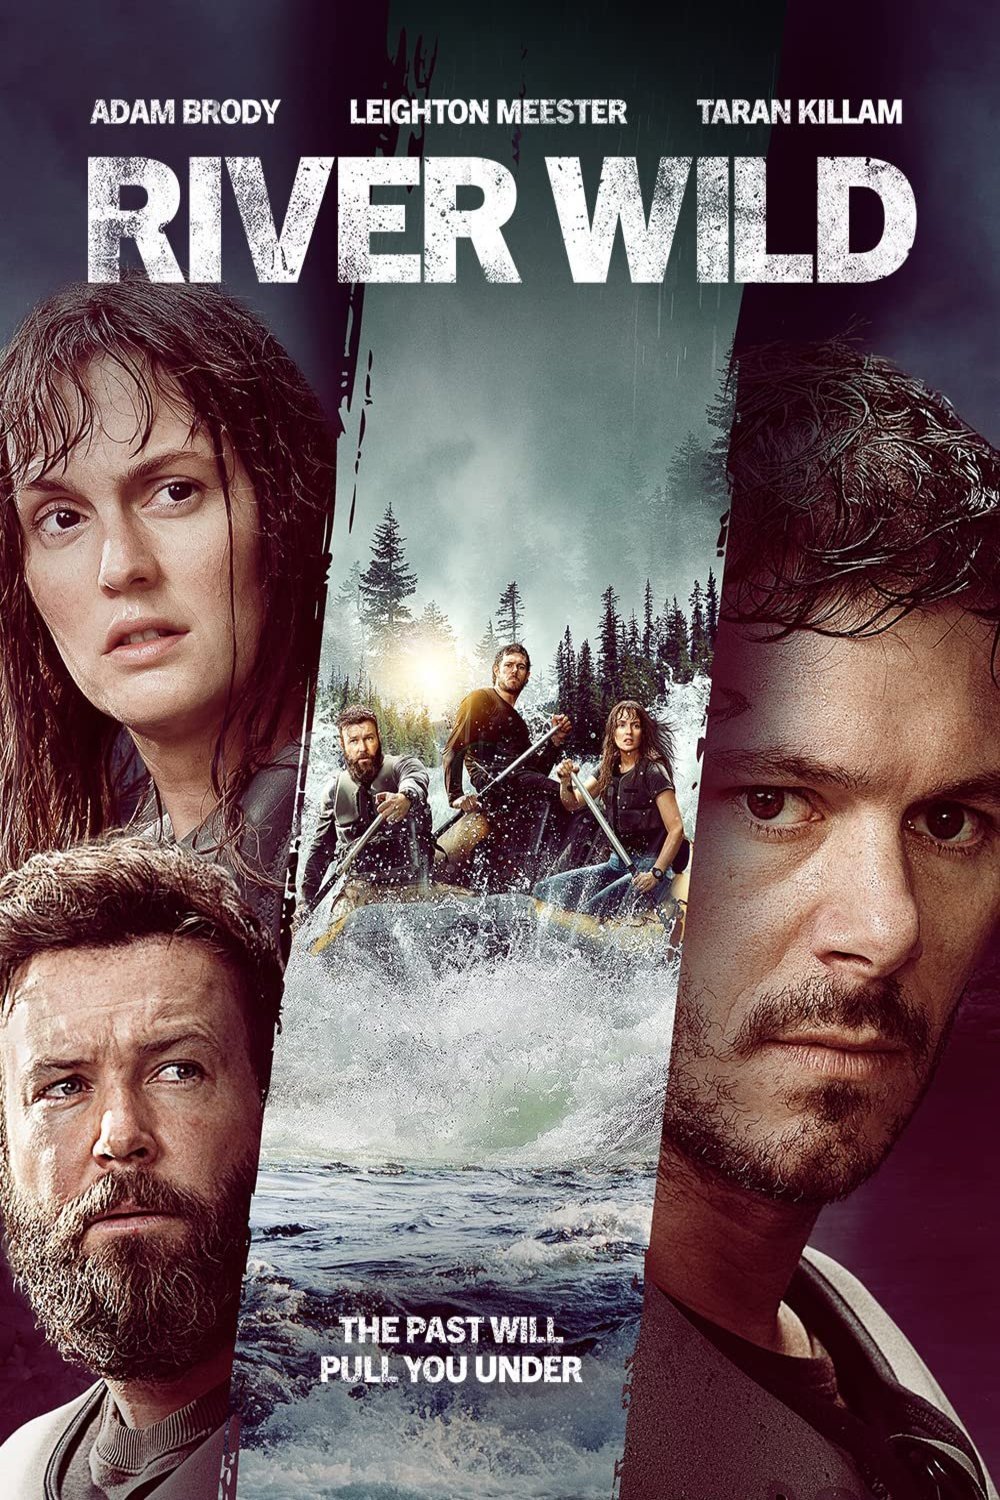 L'affiche du film The River Wild